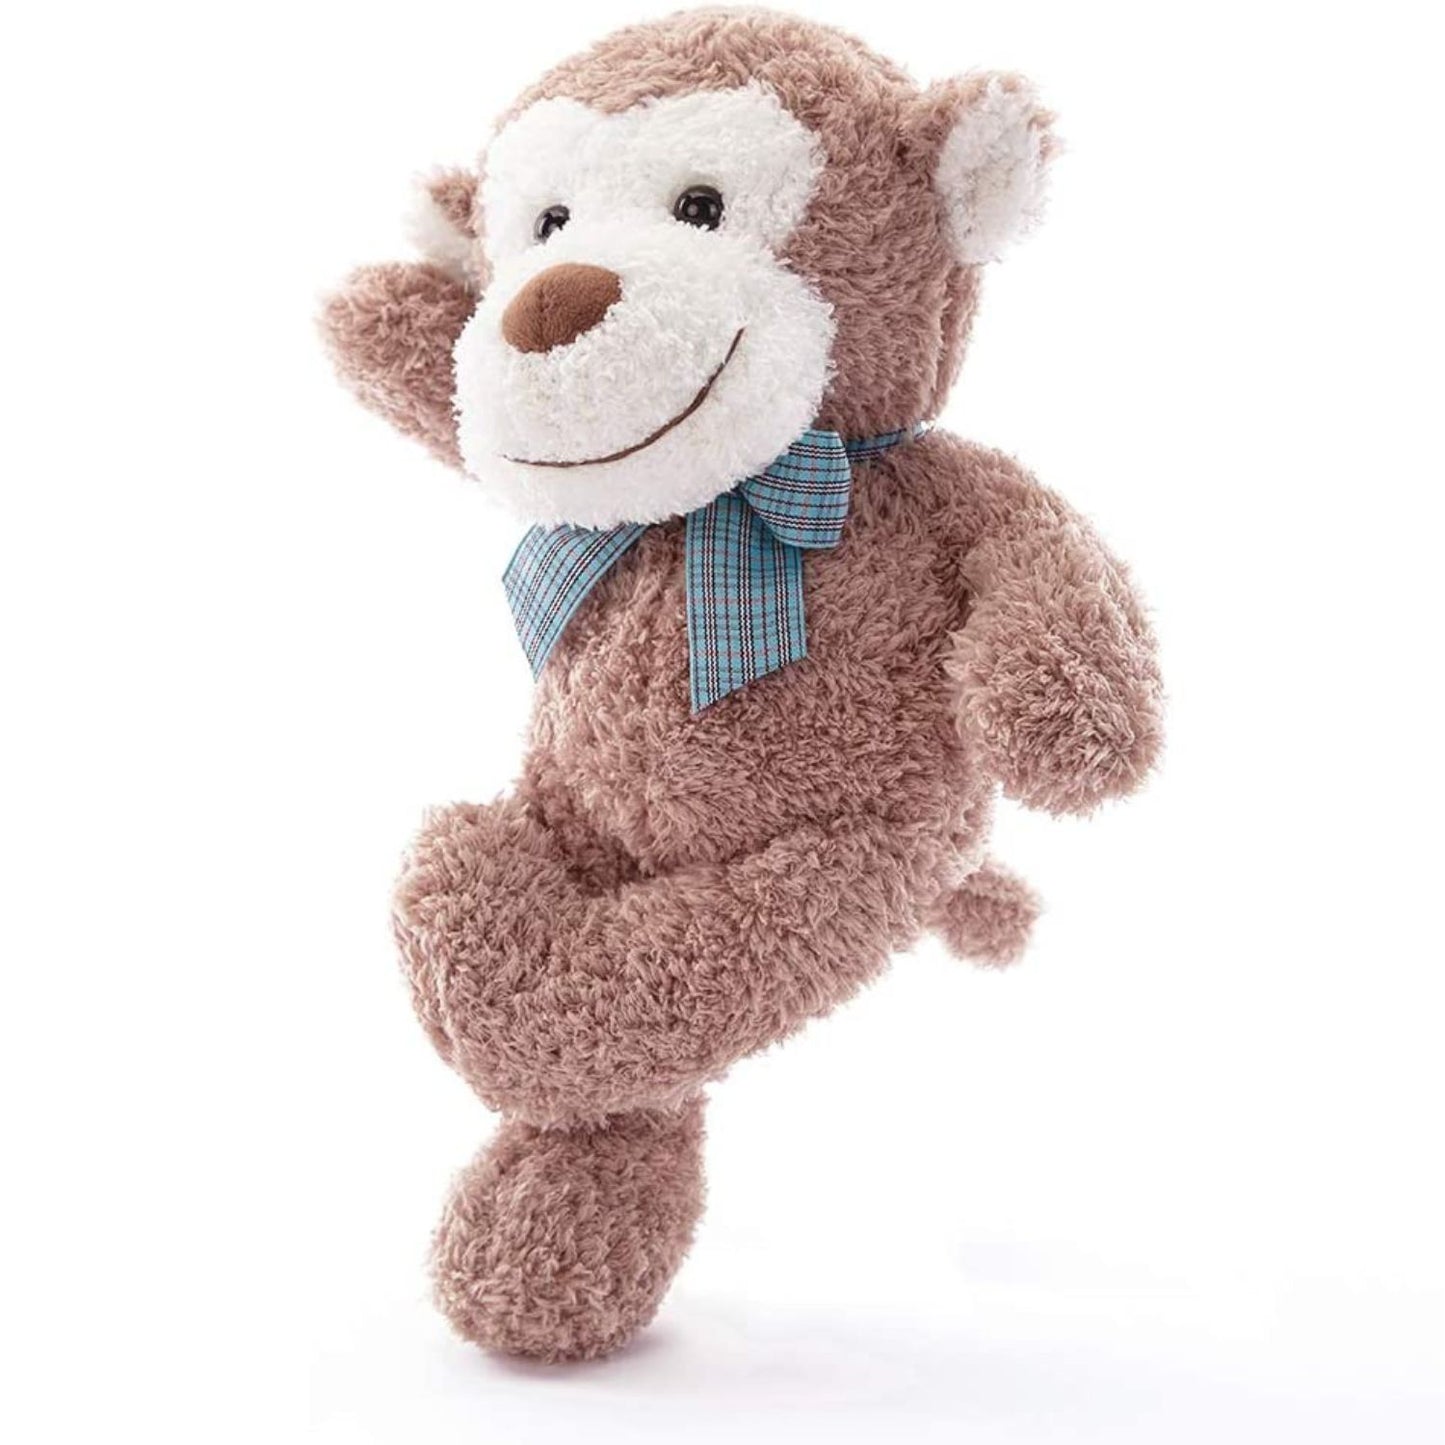 3 Packs Stuffed Animal Toy Set ( Bunny, Monkey, Panda ), 13.5 Inches - MorisMos Plush Toys